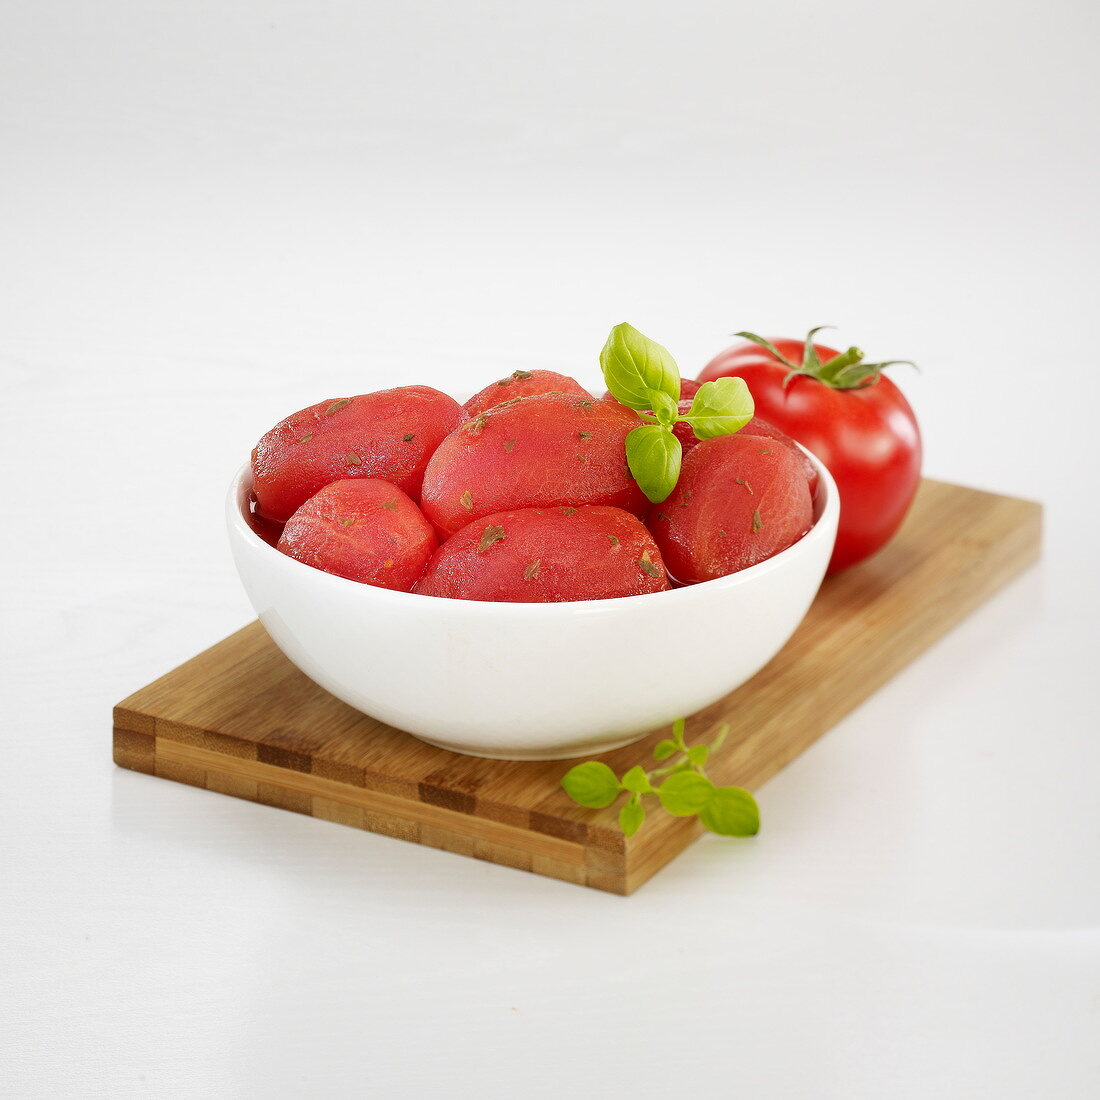 Bowl of whole peeled tomatoes